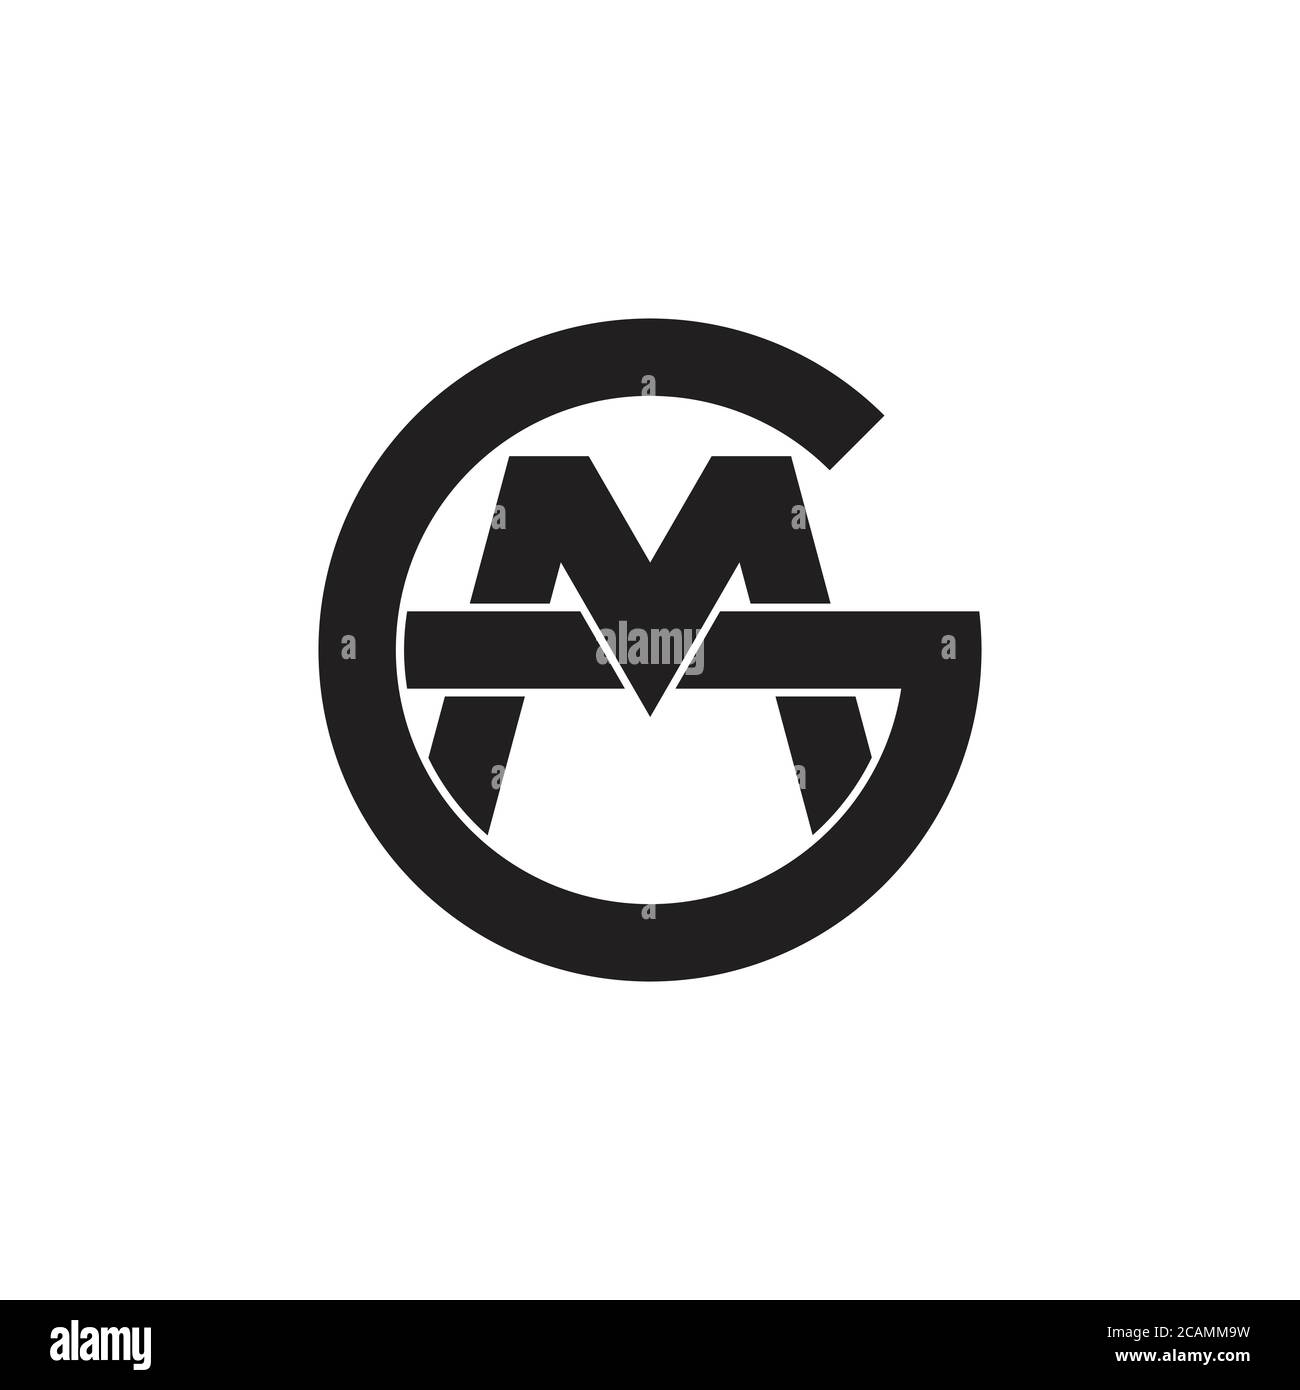 gm monogram logo